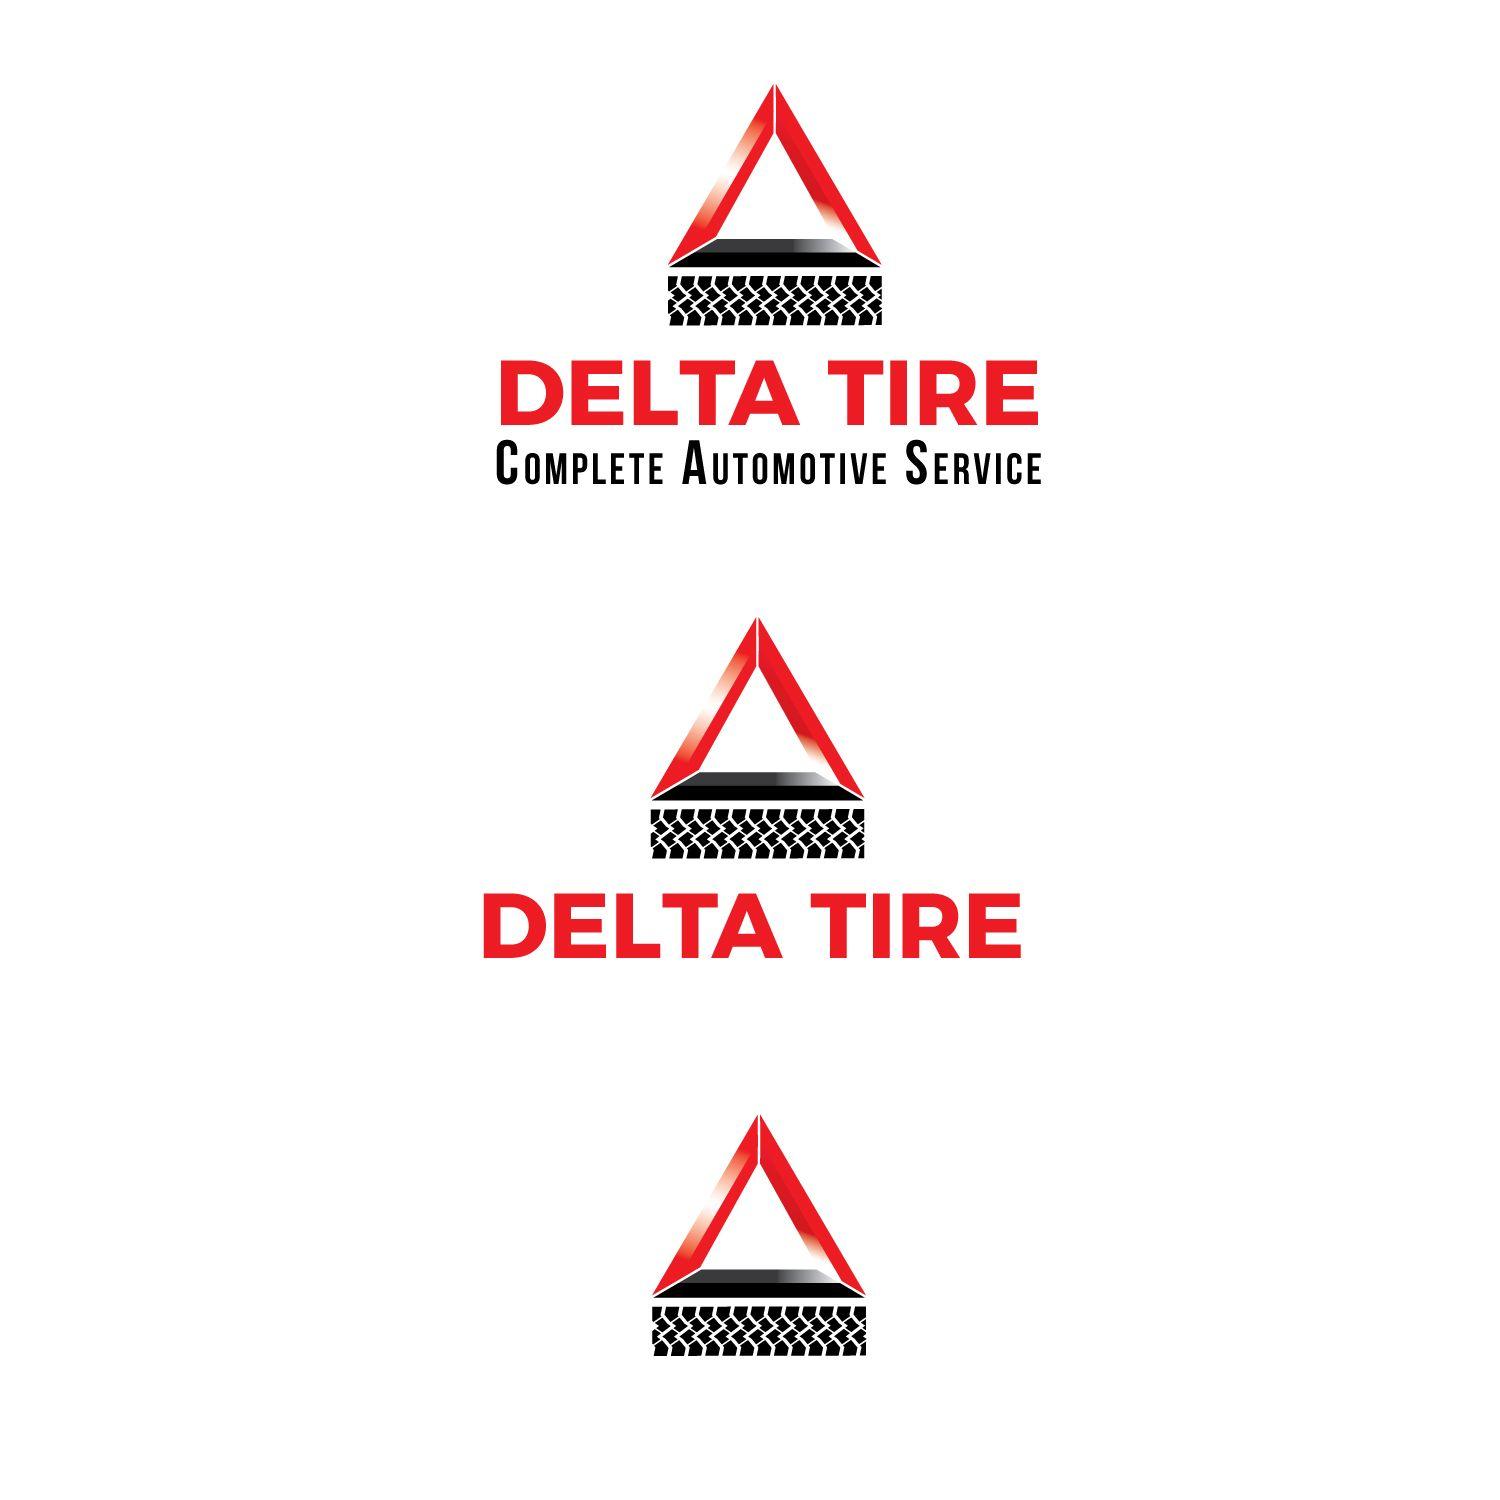 Triangle Automotive Logo - Serious, Modern, Automotive Logo Design for Delta Tire Complete